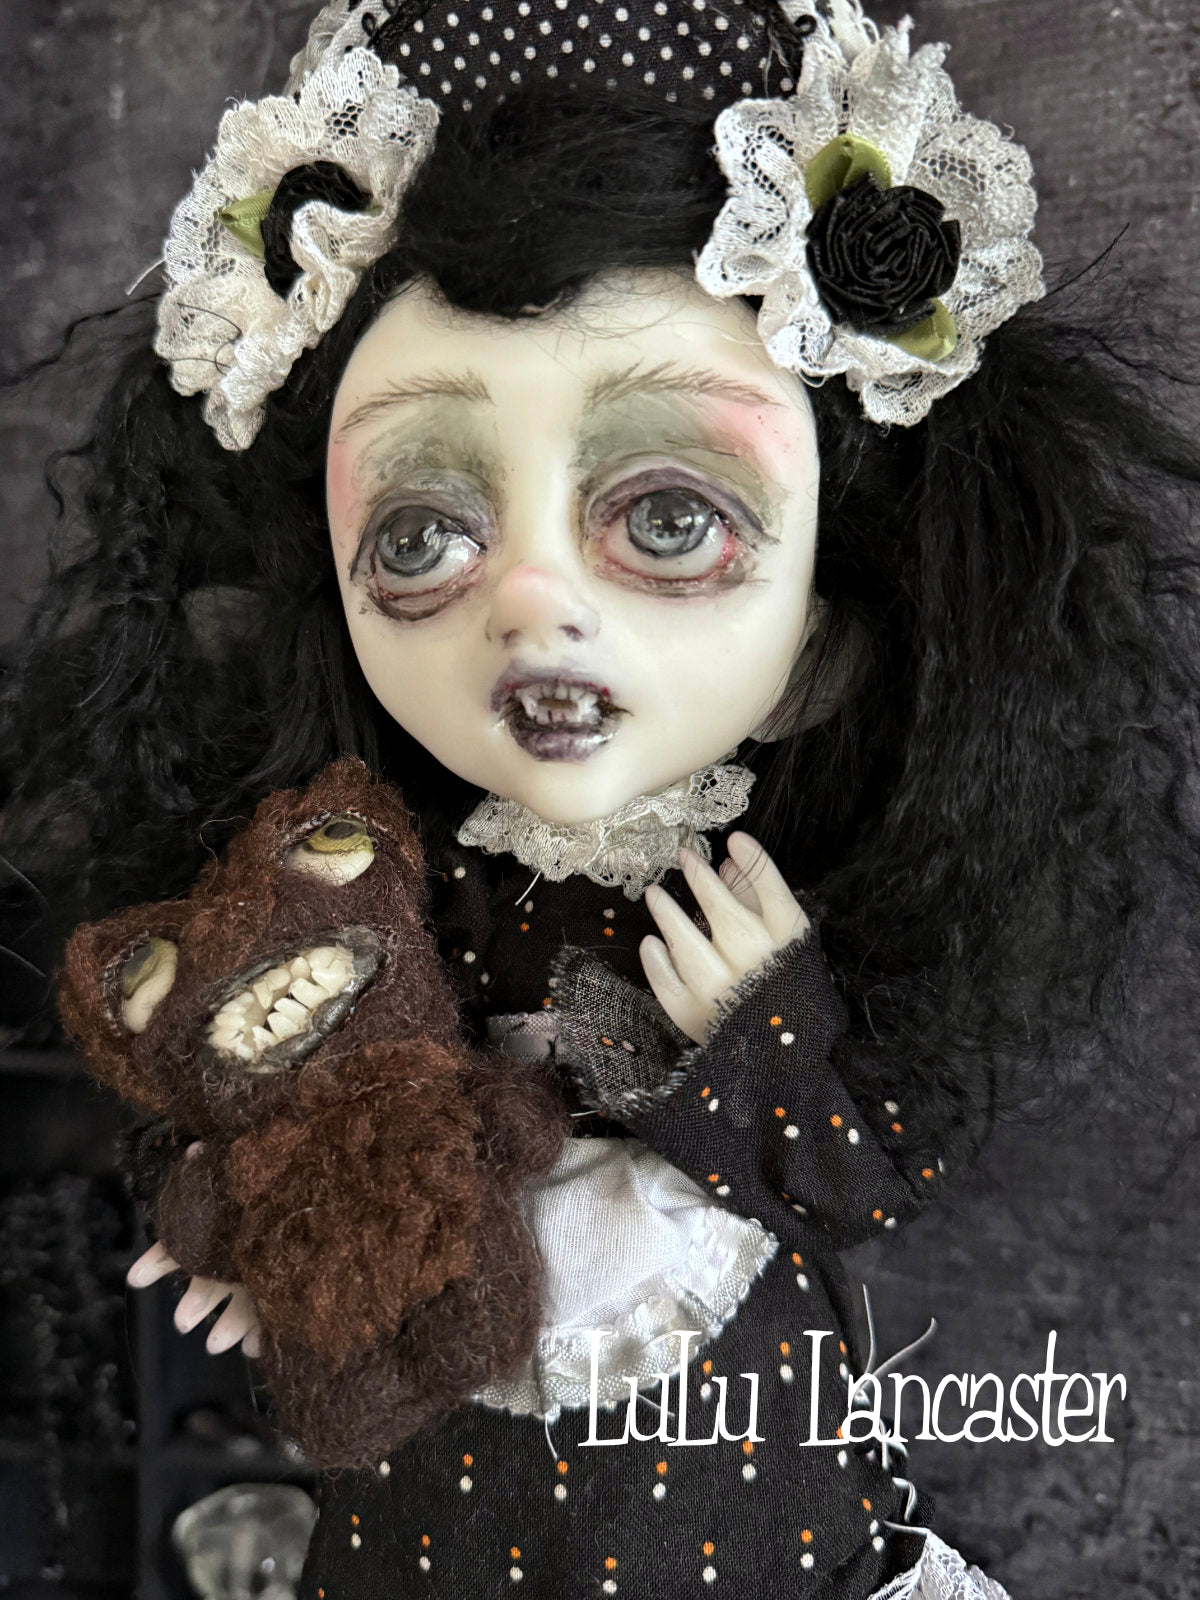 Keely and Killer Vampire Original LuLu Lancaster Art Doll